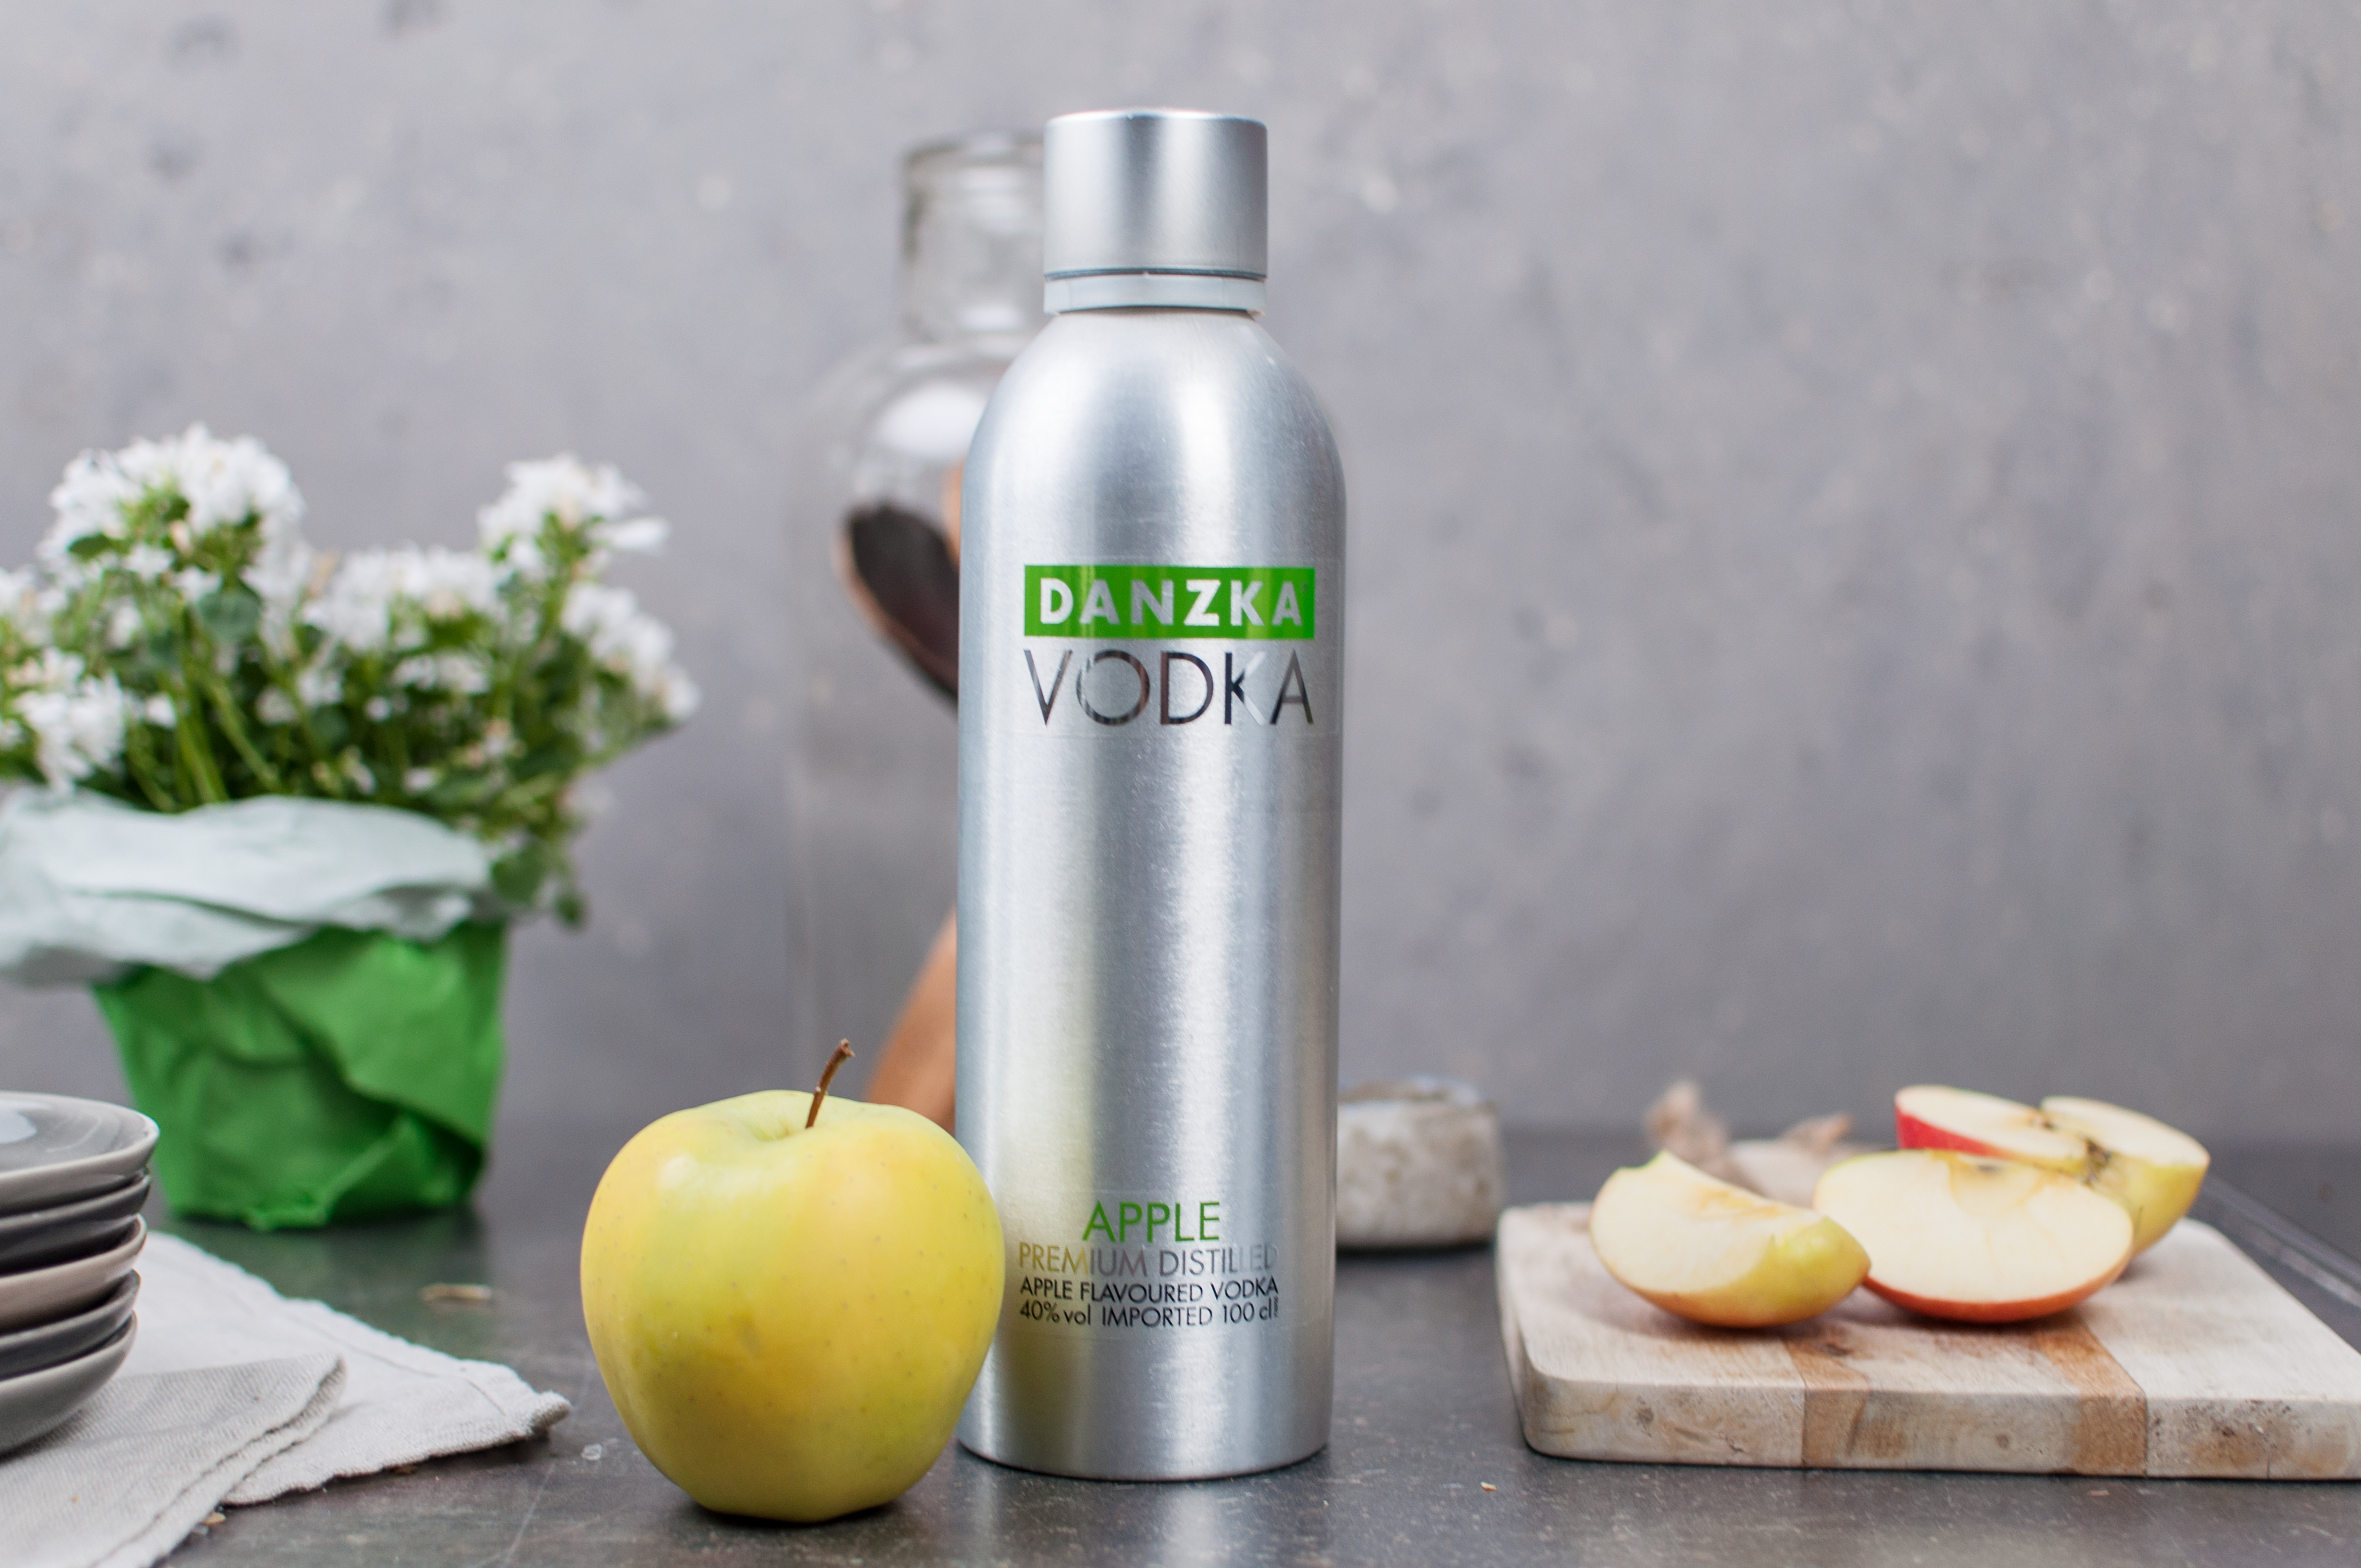 Danzka Vodka Apple 40% 1,0l